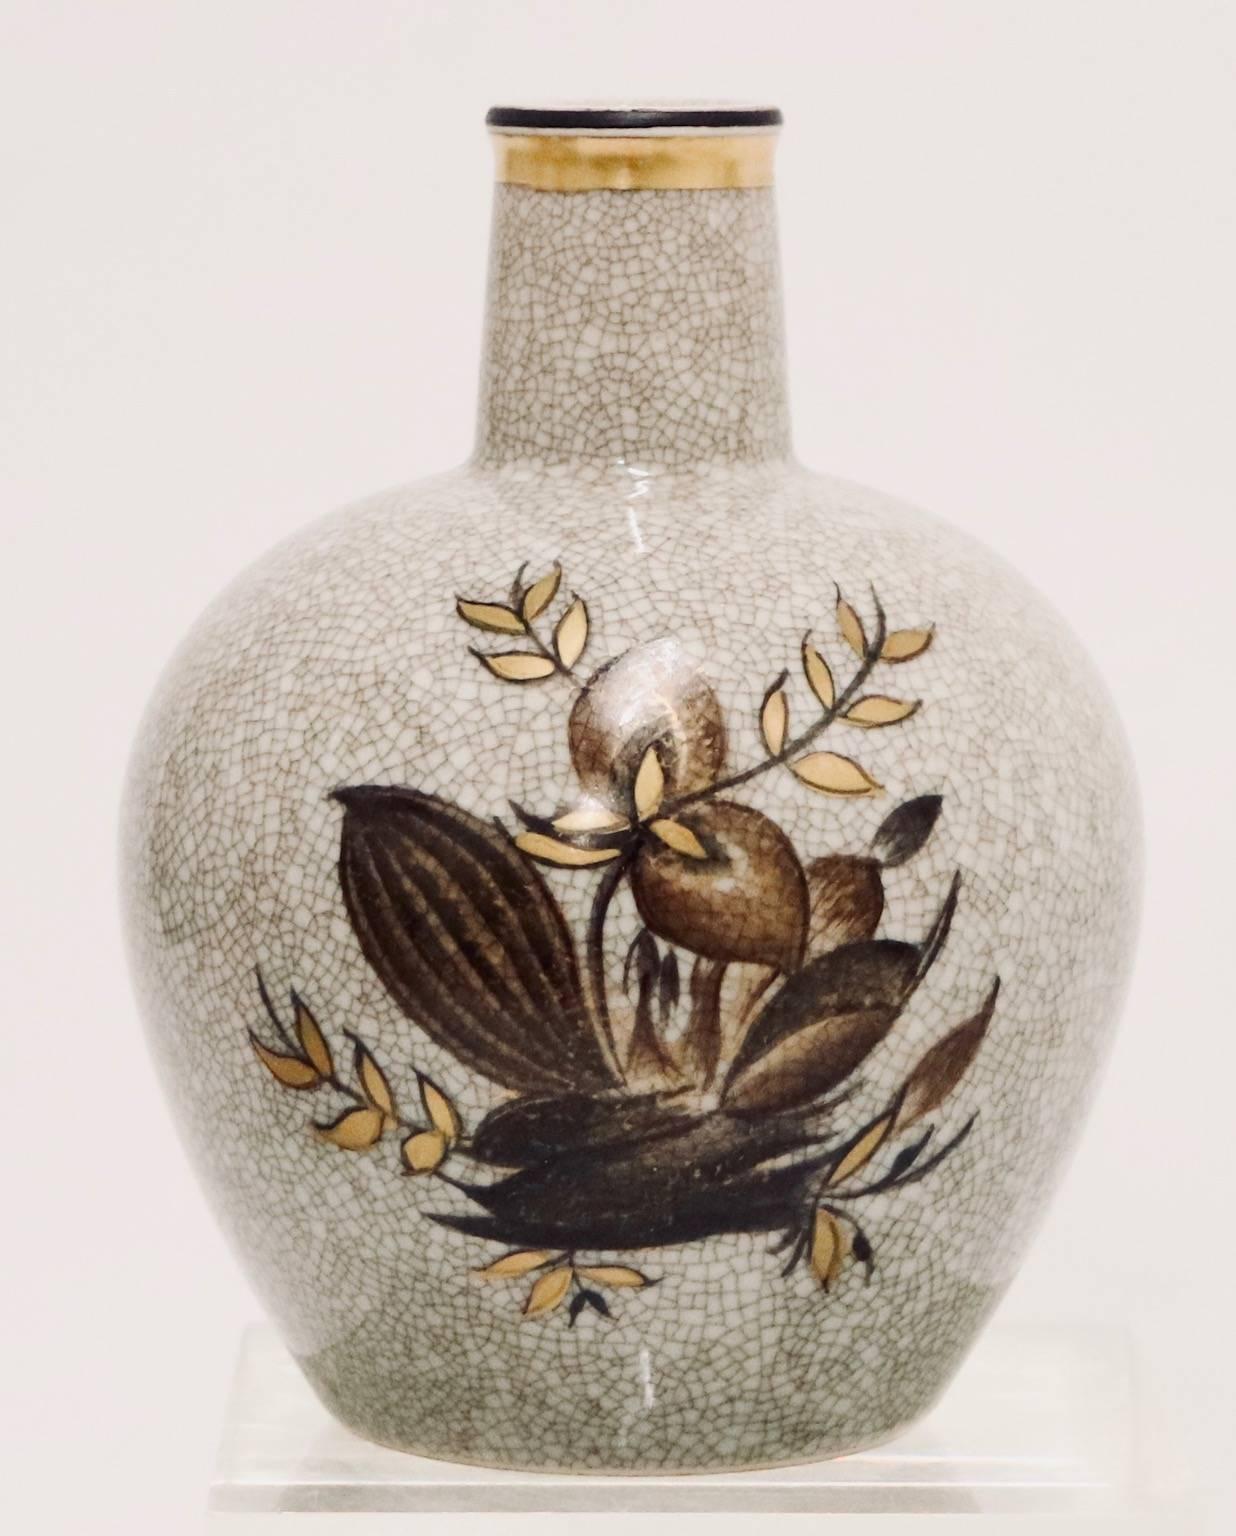 Danish Royal Copenhagen Midcentury Vases in Crackle Finish Porcelain, Signed 2